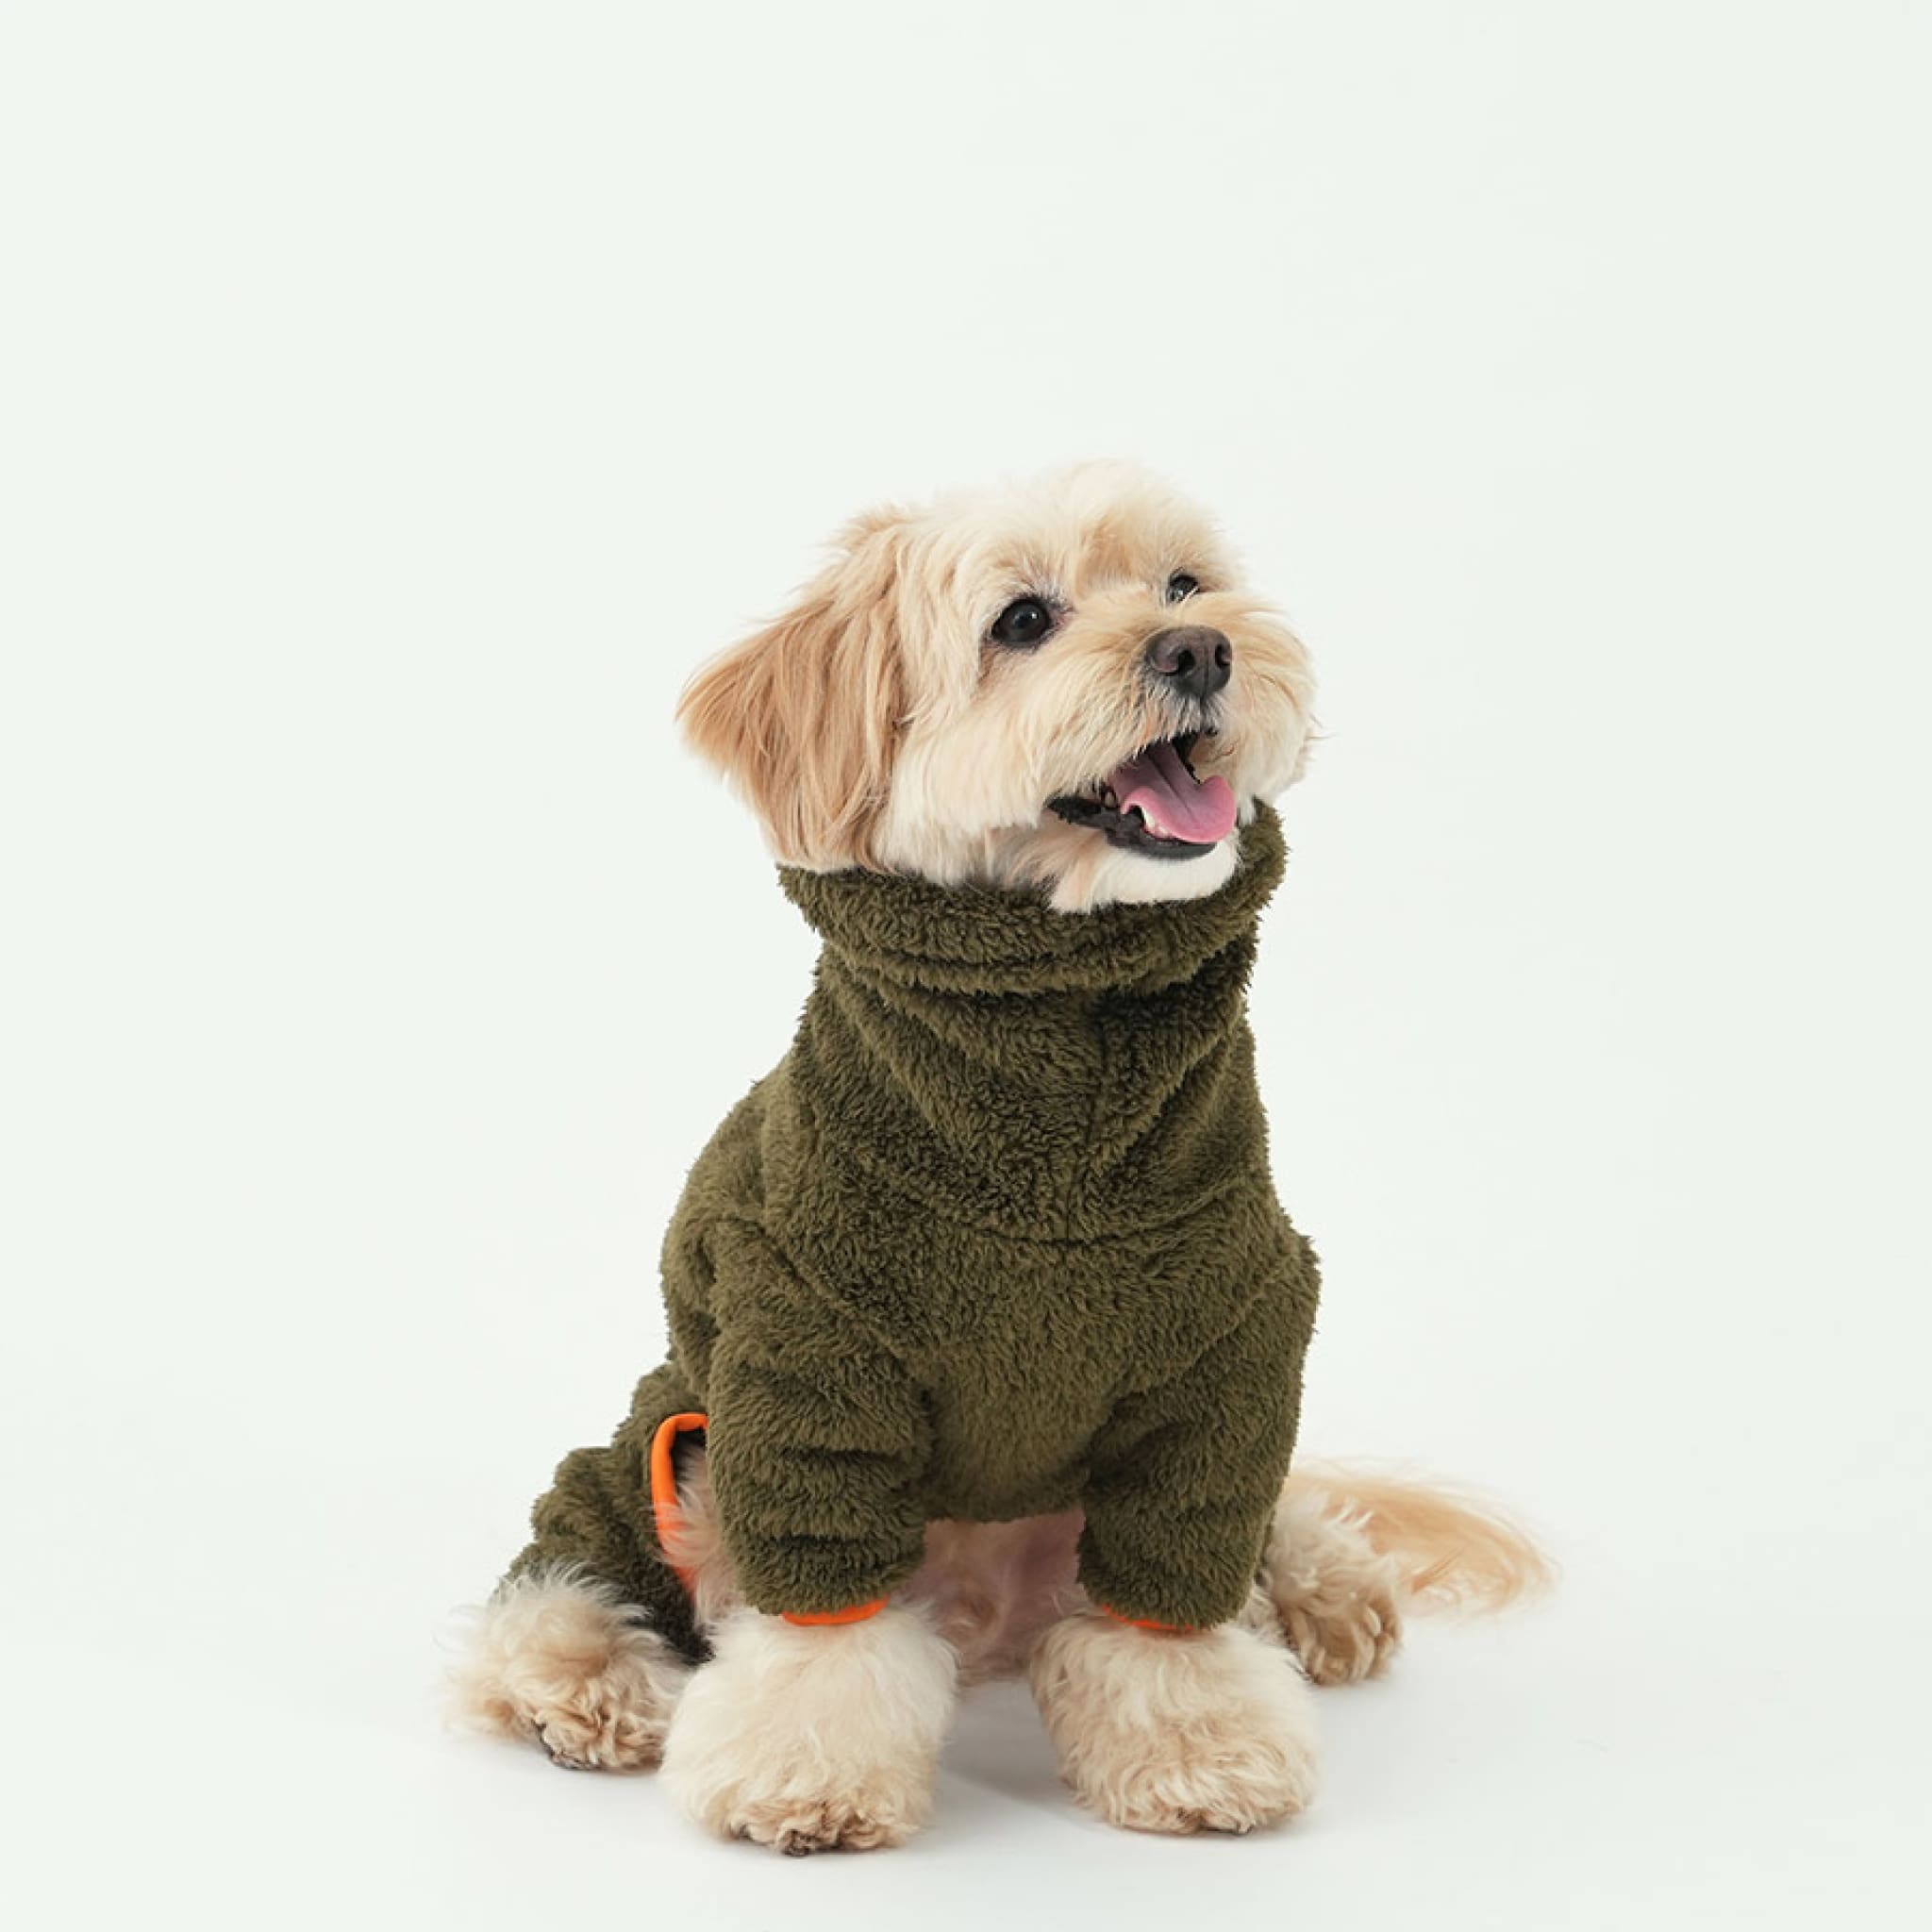 Dog wearing north fleece jumpsuit